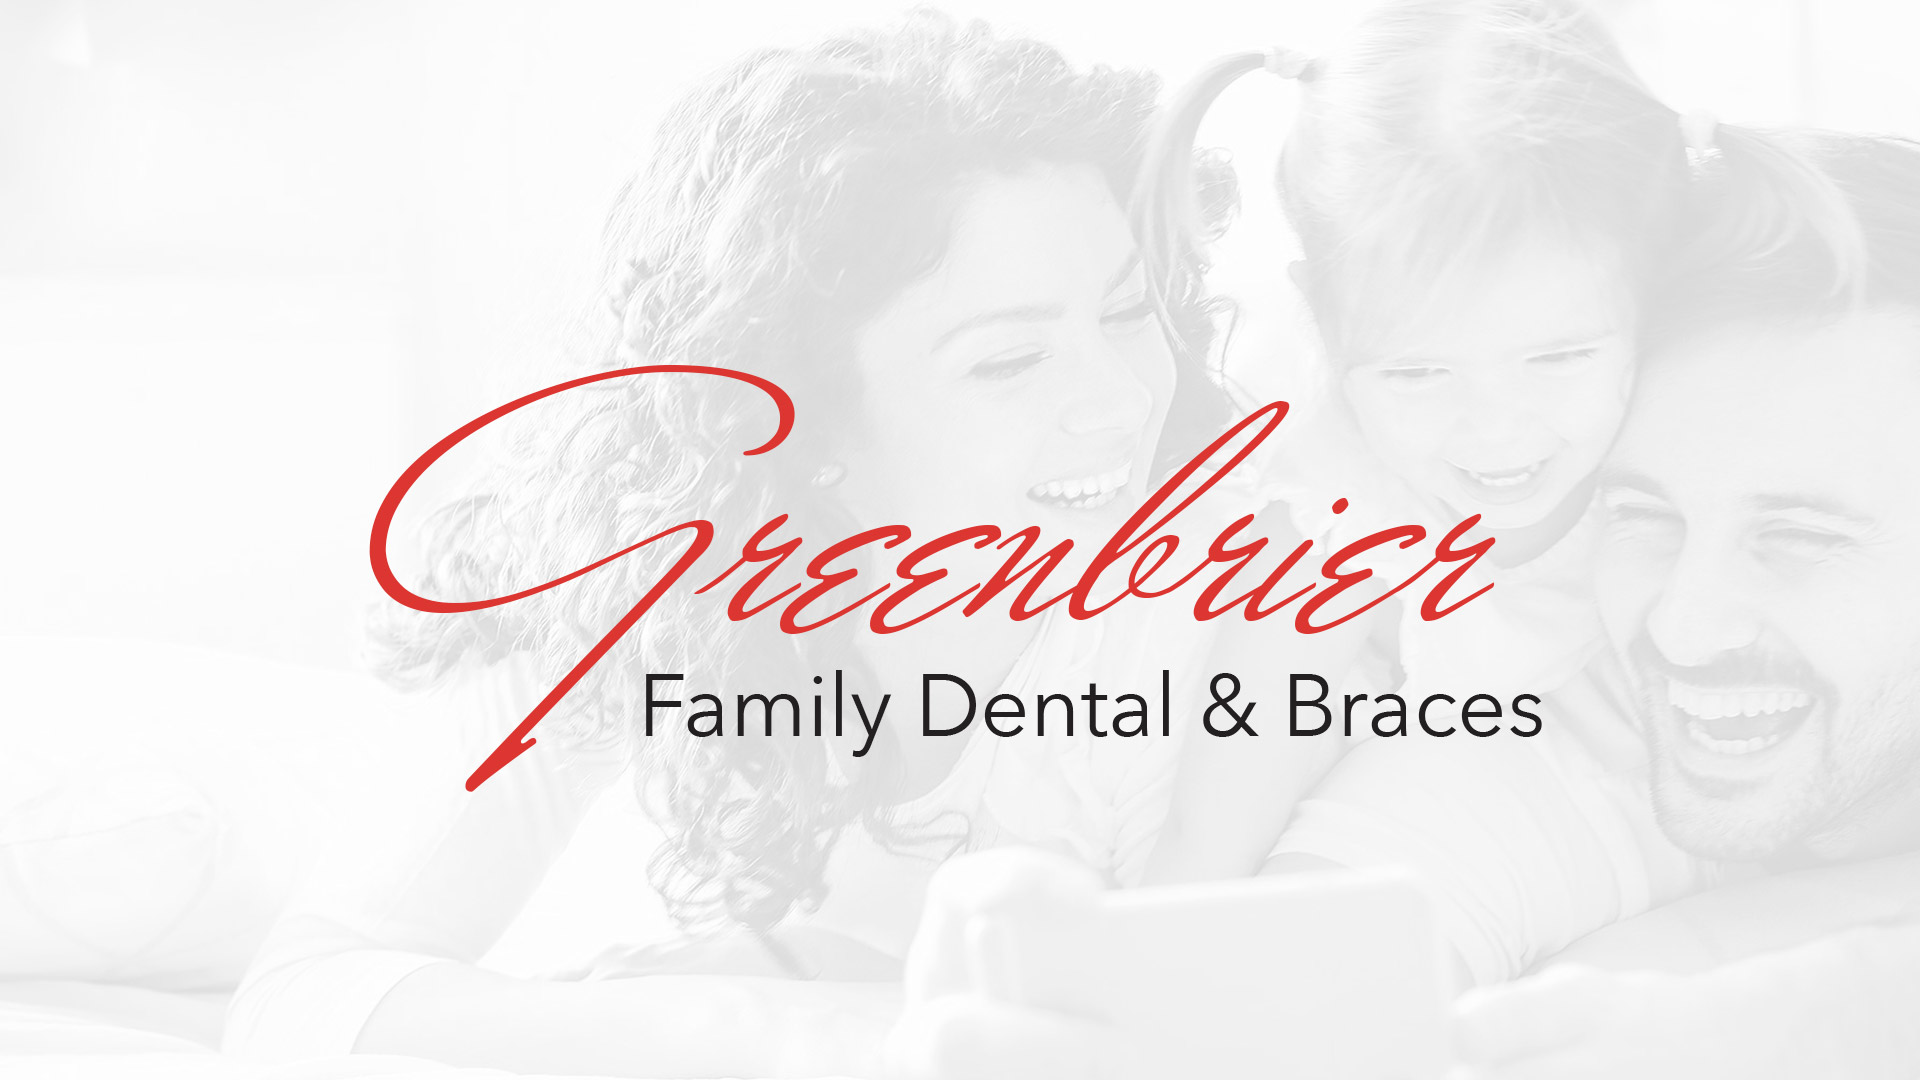 Company logo of Greenbrier Family Dental